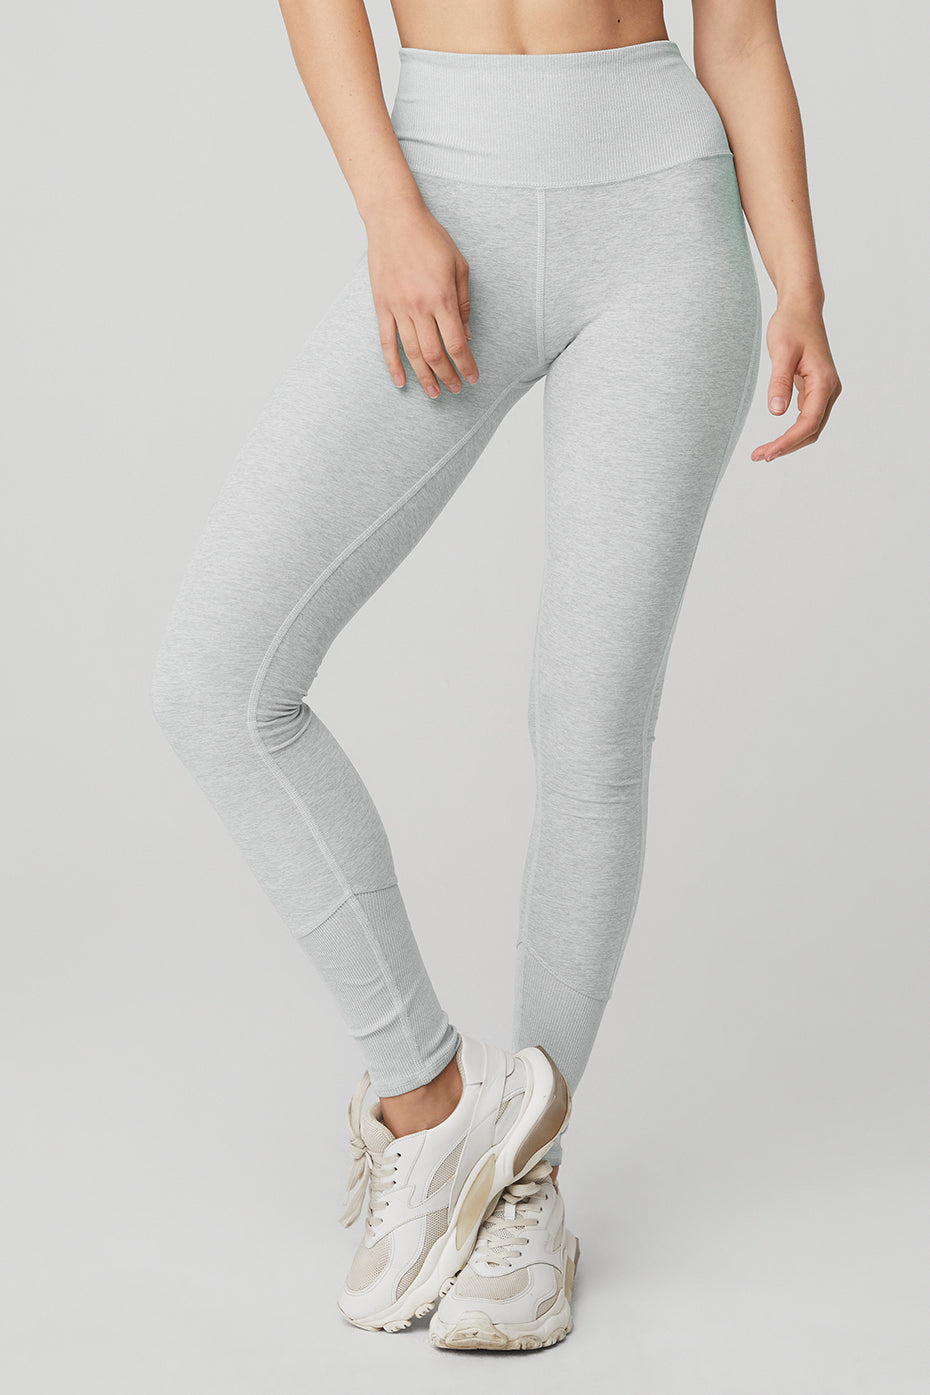 Heather Grey Emi Capri – Equilibrium Activewear